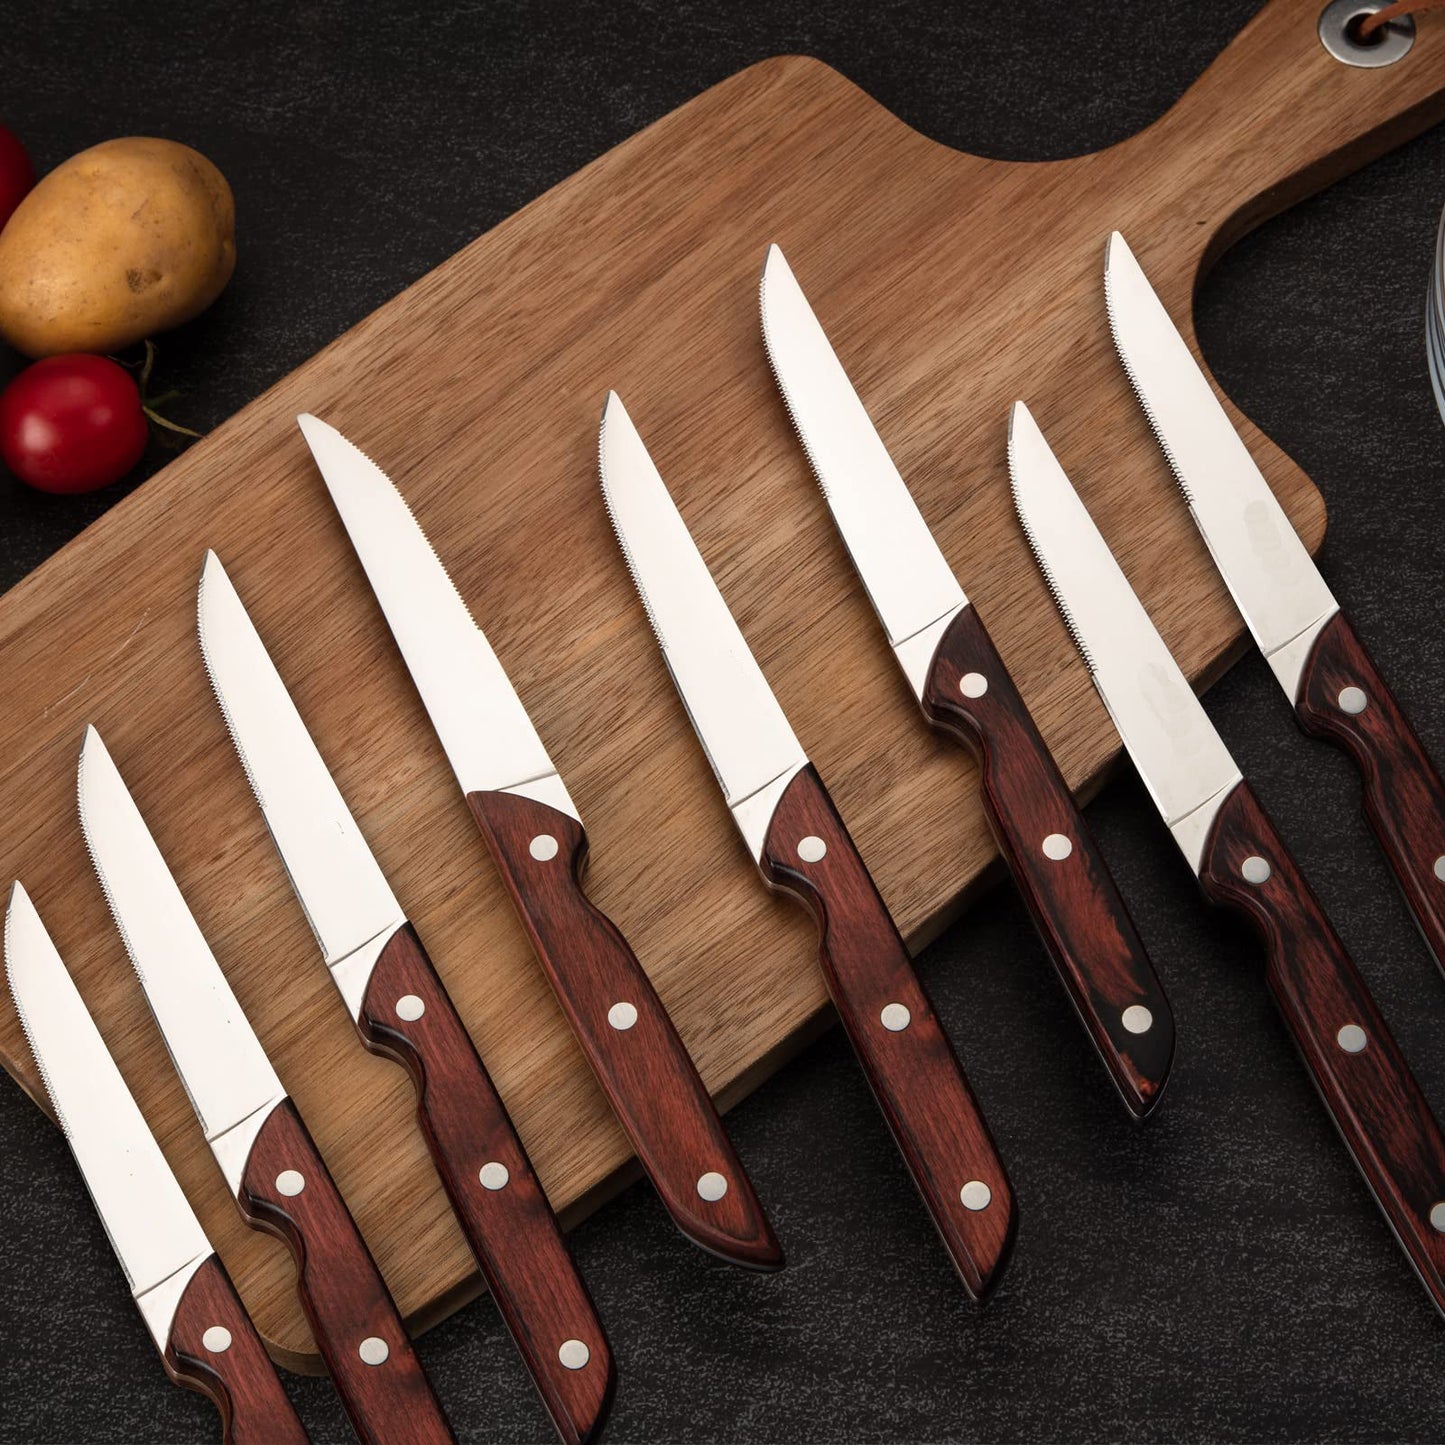 GARVEE Steak Knife Set Of 8 Professional Steak Knives Premium Wooden Handle